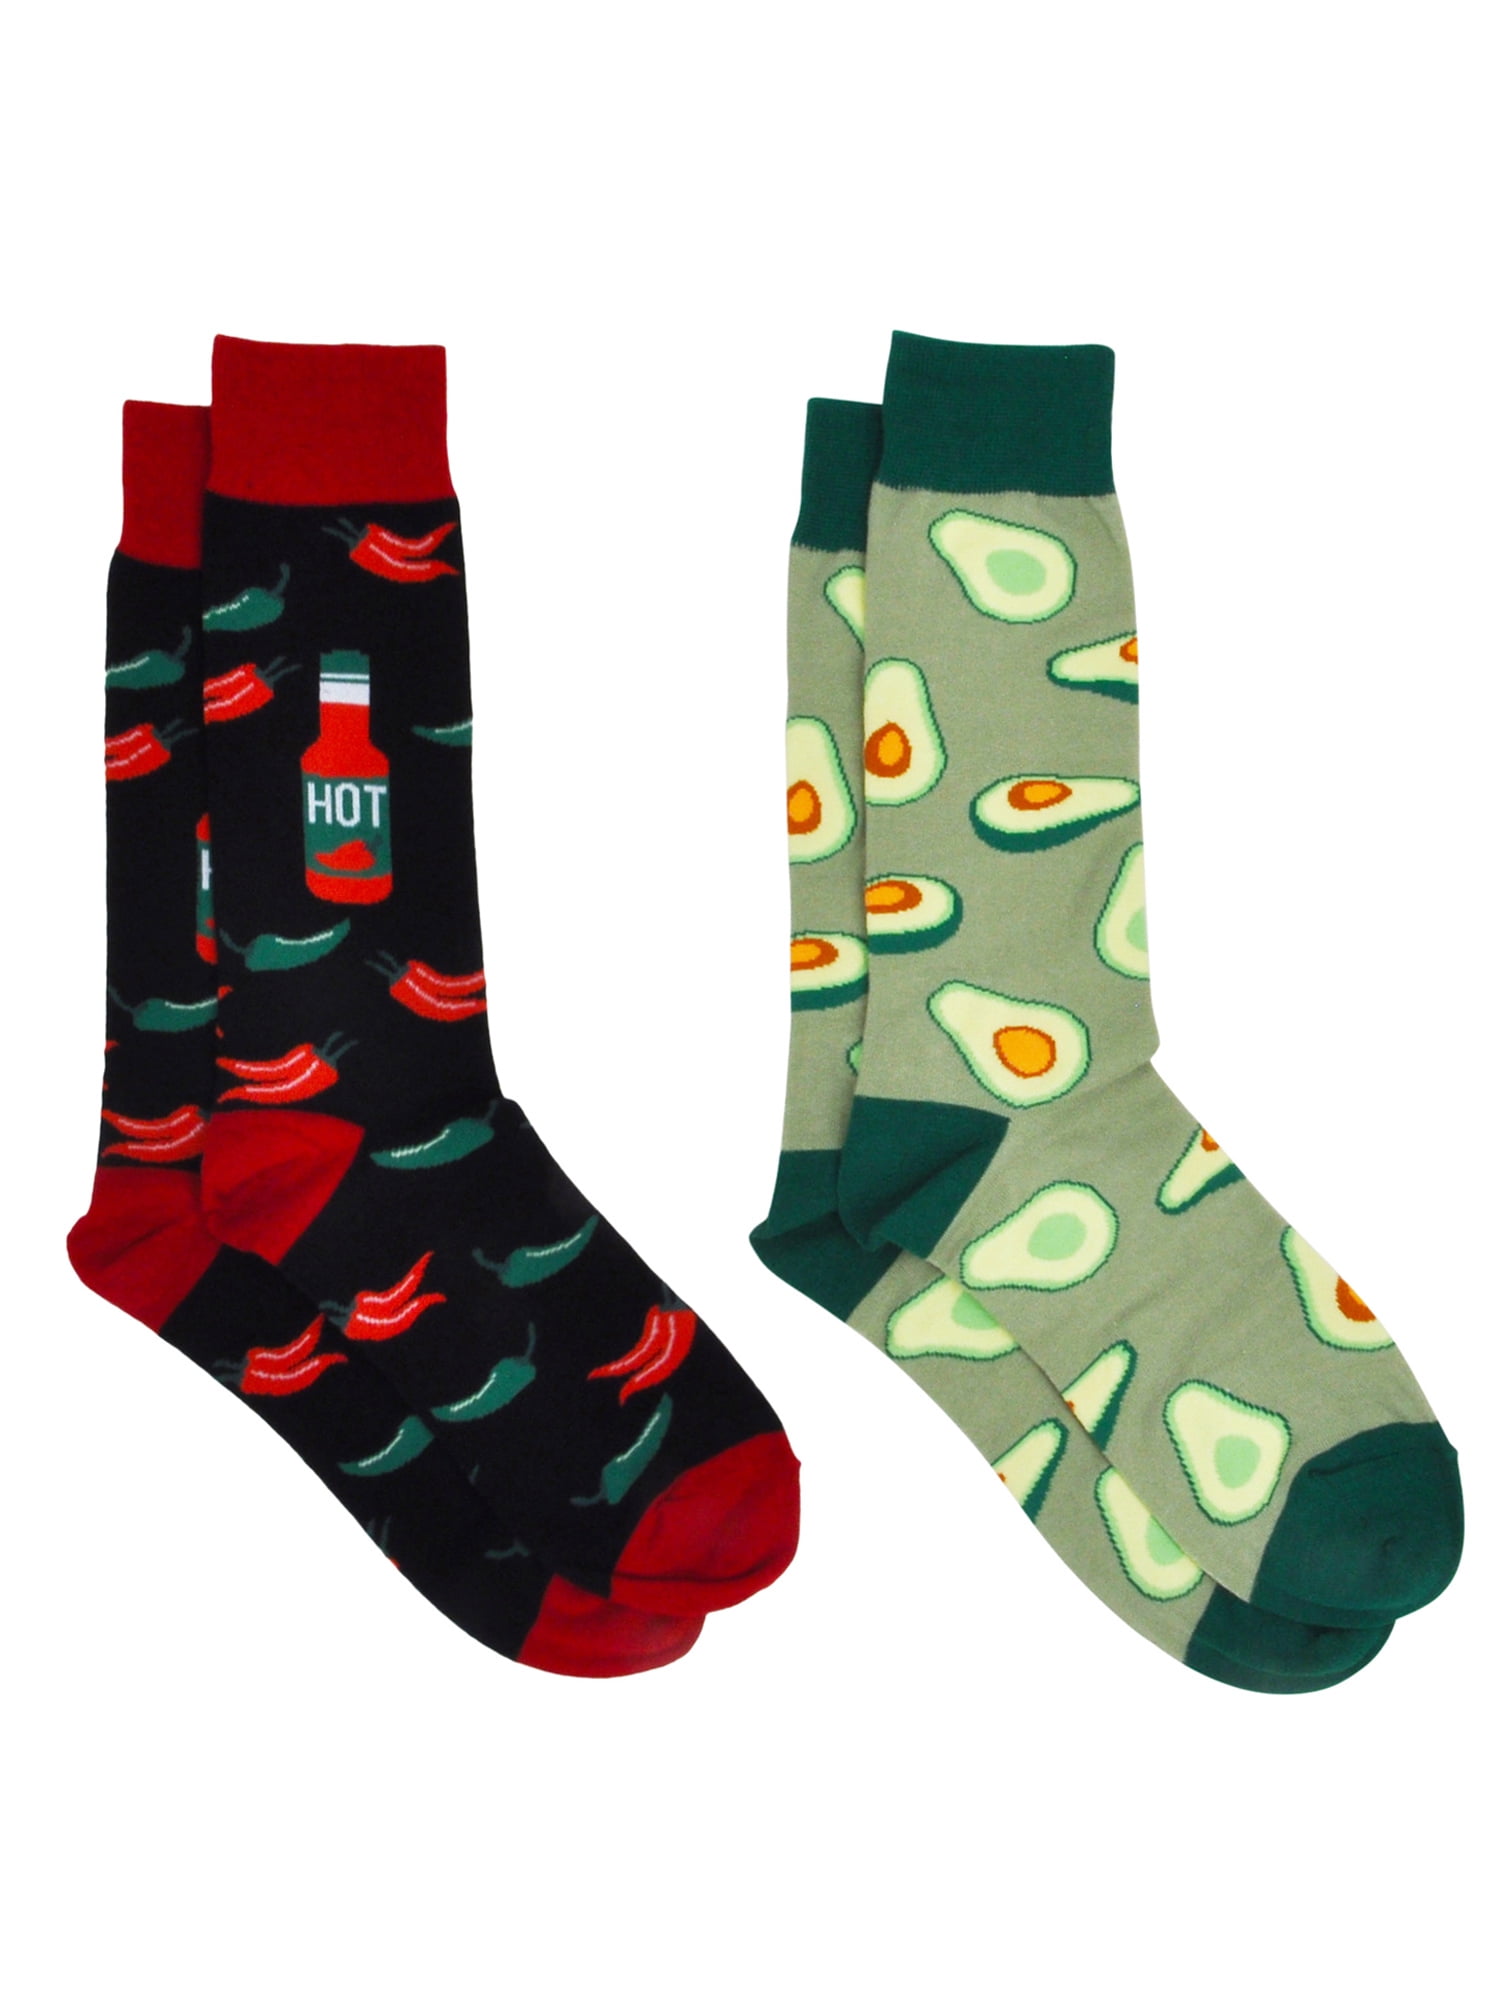 Designed fun Men's Fox Cotton Dress Socks-groomsmen socks-men\u2019s happy socks-Funky socks for him-Father's gift idea-Crew Socks